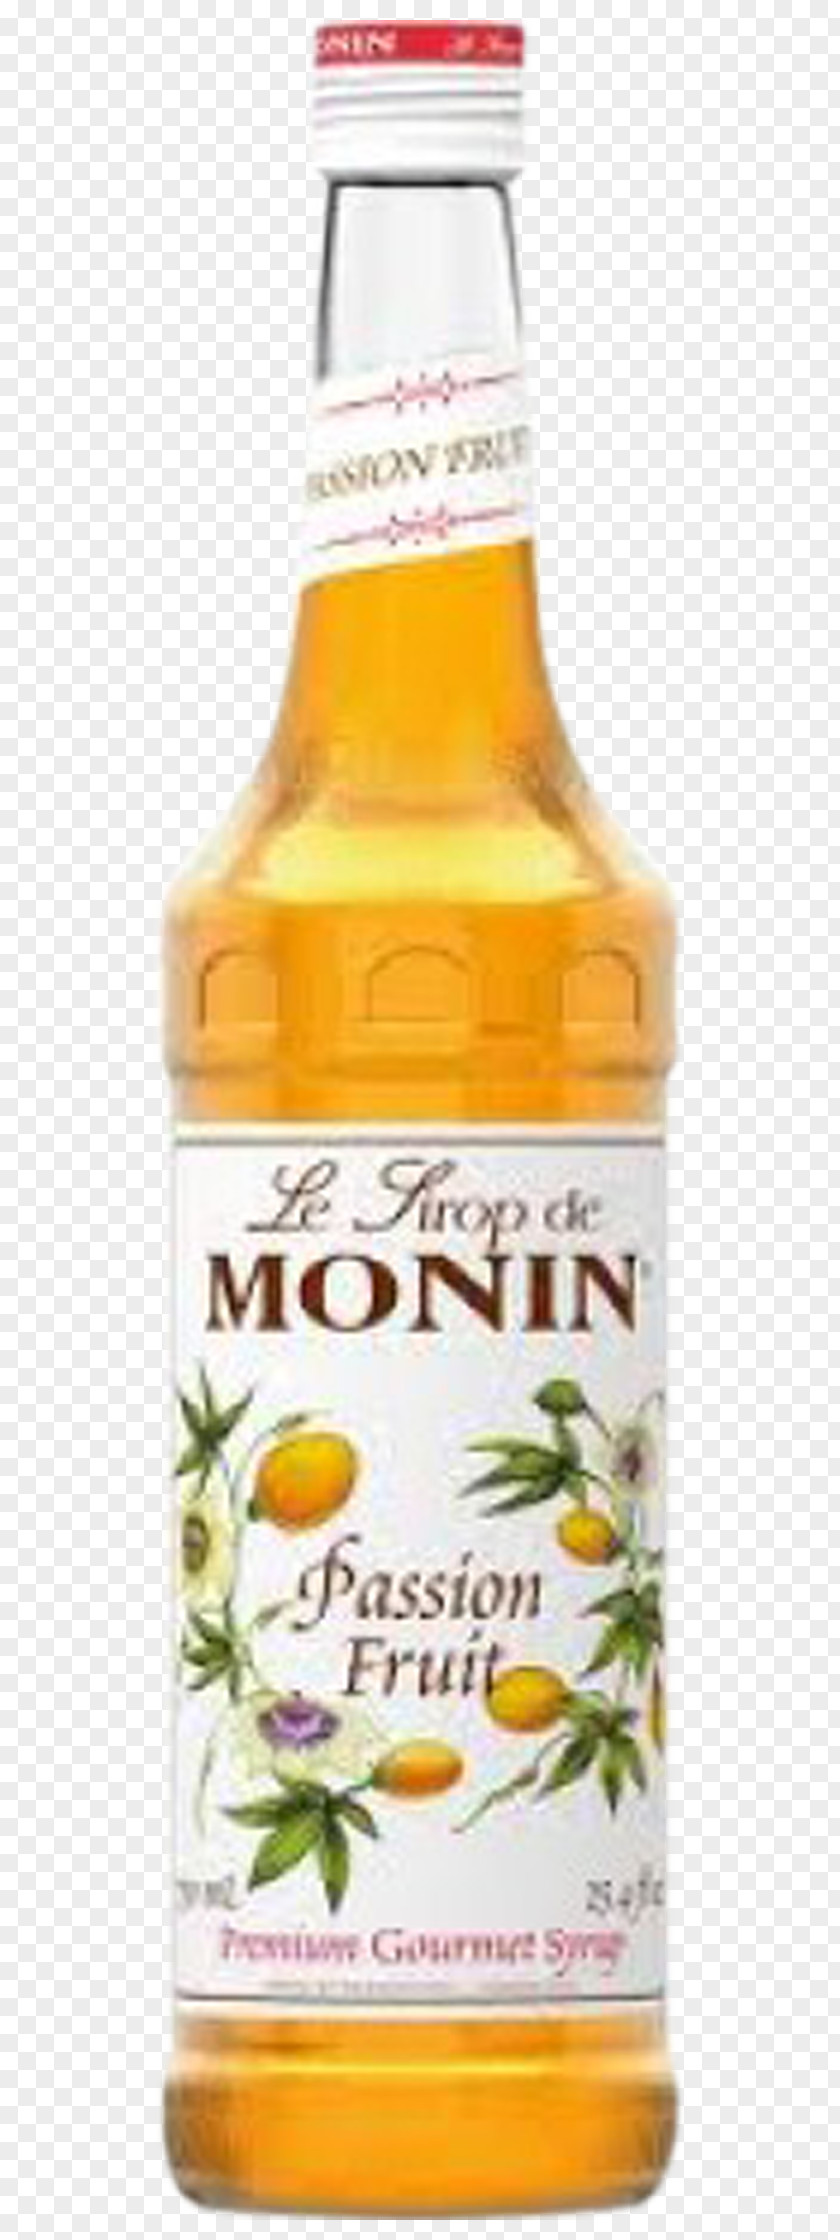 Passion Fruit Liqueur Cocktail Distilled Beverage Syrup GEORGES MONIN SAS PNG